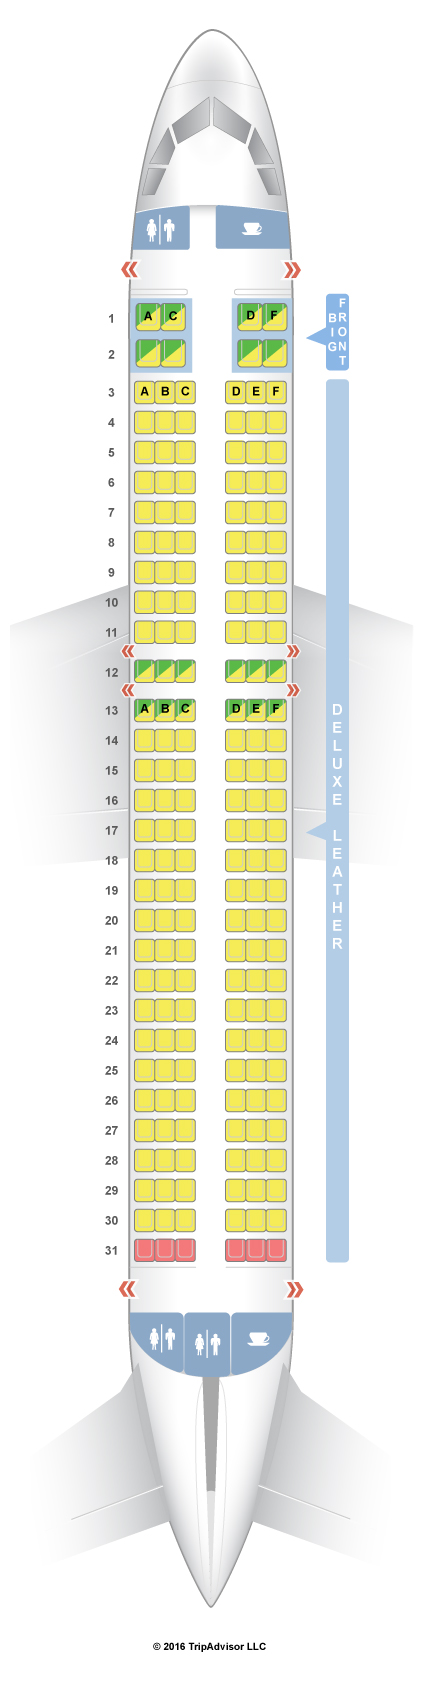 Spirit Air Seating Chart